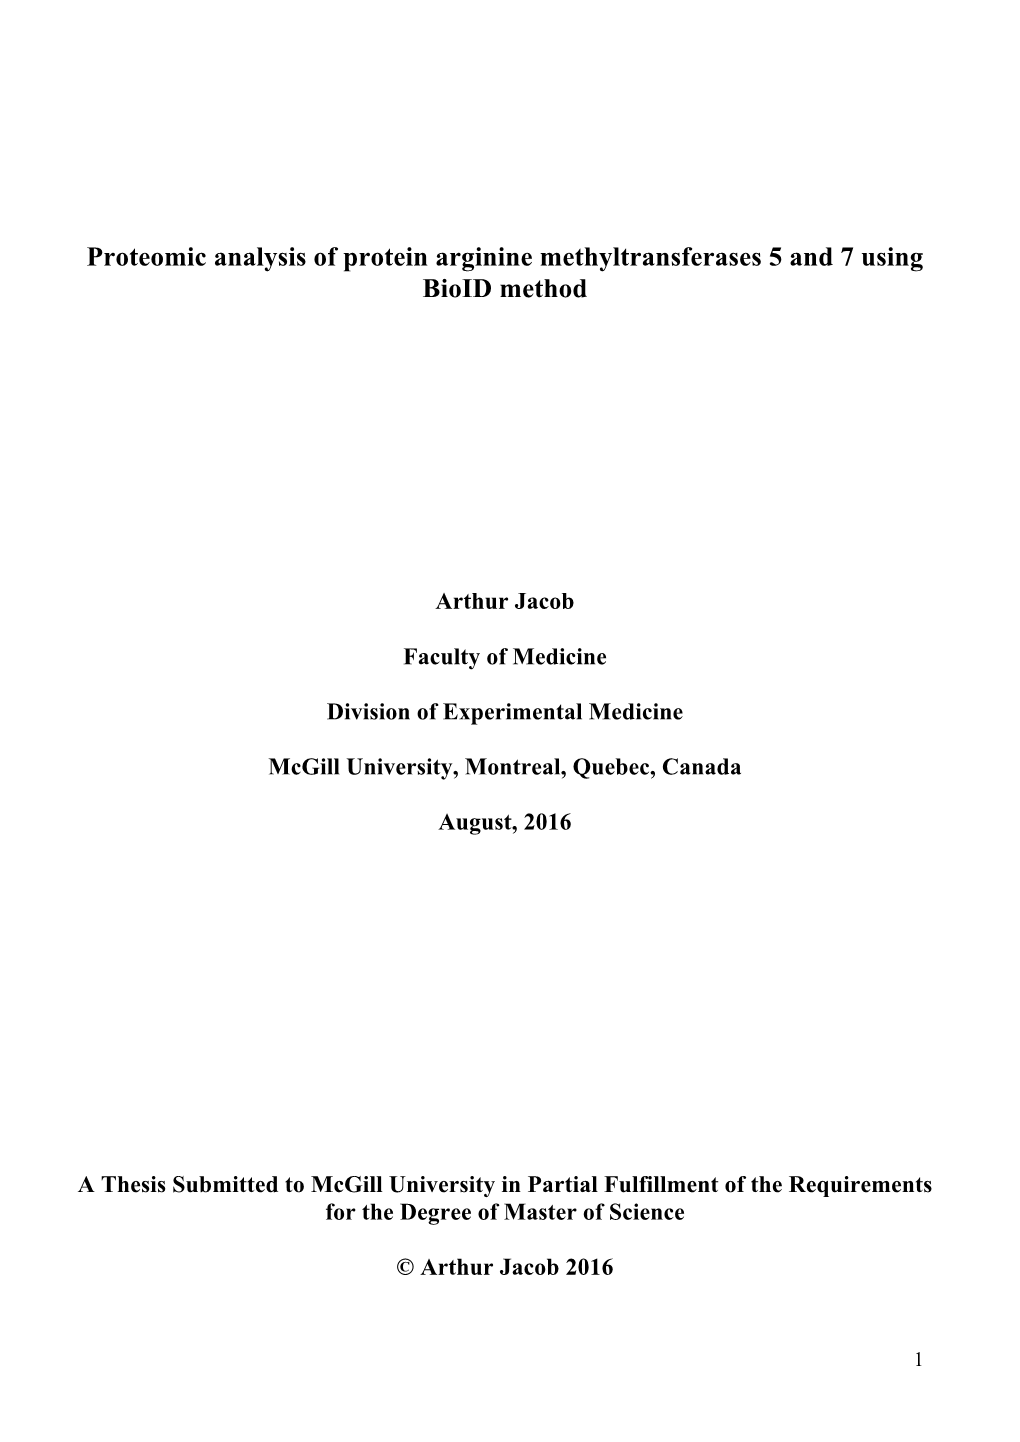 Proteomic Analysis of Protein Arginine Methyltransferases 5 and 7 Using Bioid Method